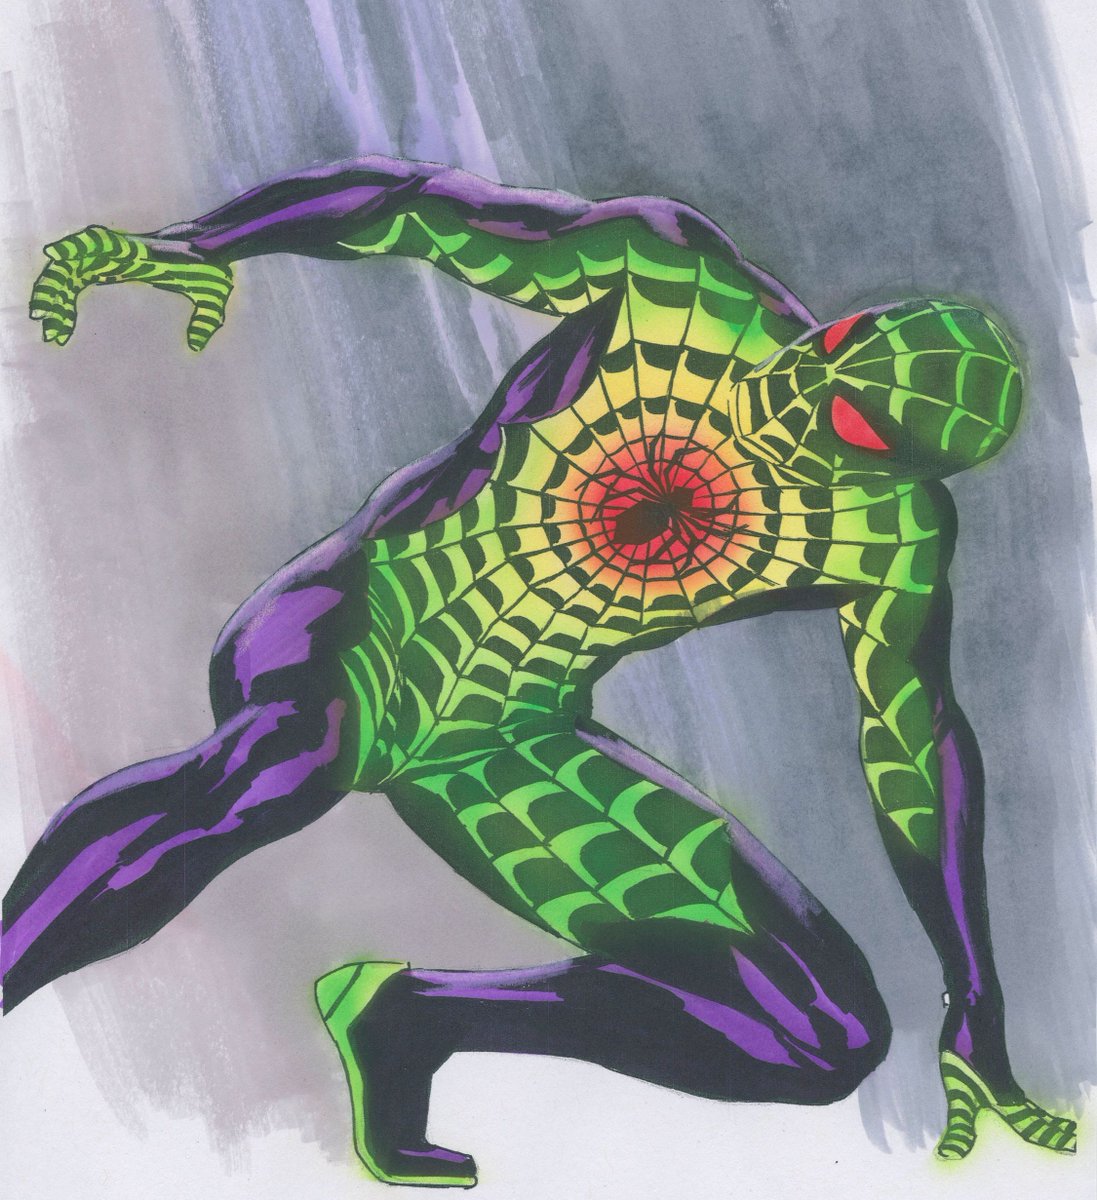 RT @thealexrossart: Spider-Man (Playstation Design)   #spiderman #ps4 #videogameart #comicartist https://t.co/ox48oinPVG